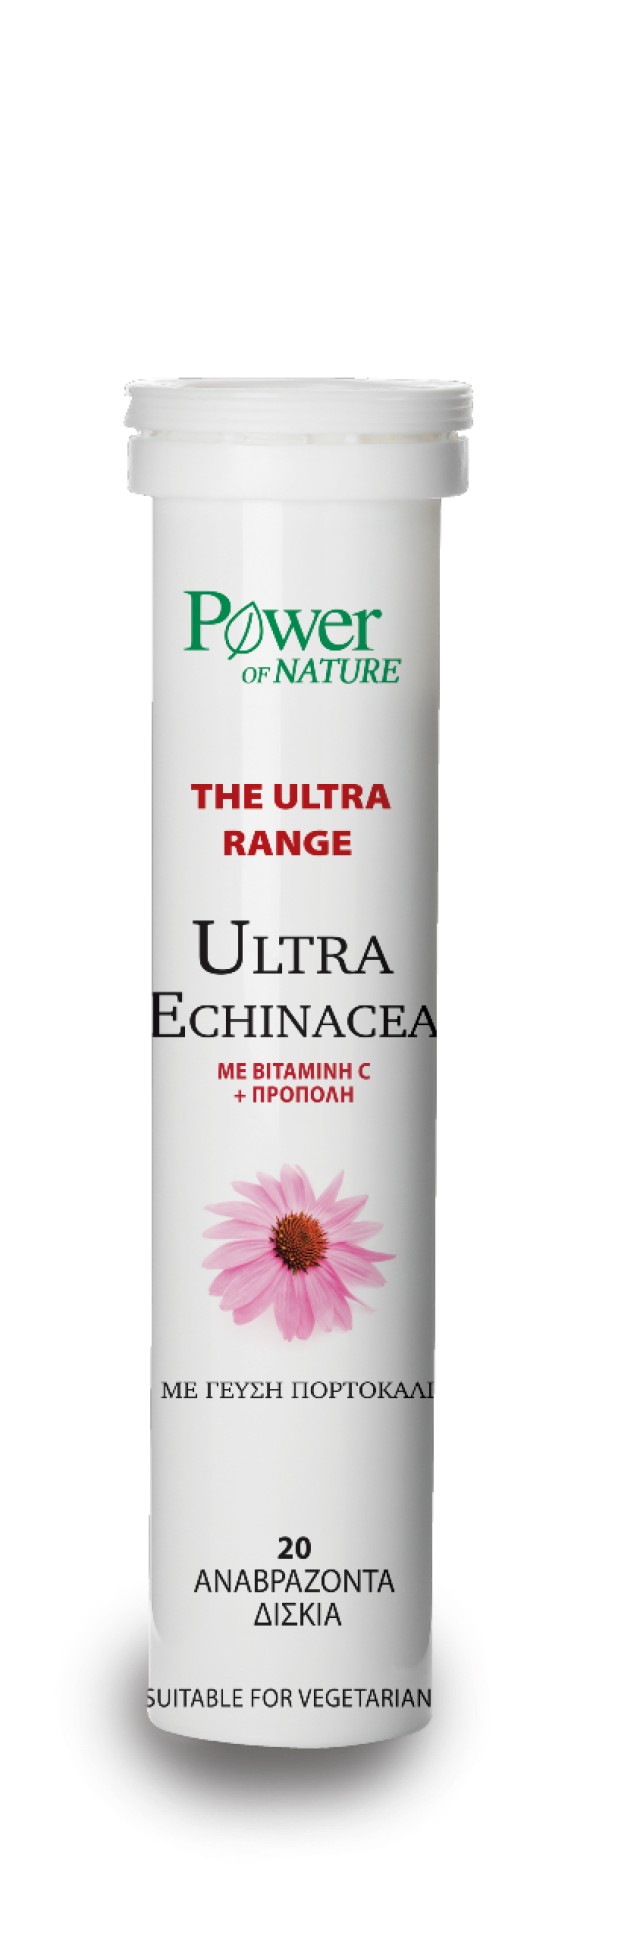 Power Of Nature Ultra Echinacea Βιταμίνη C & Πρόπολη, 20 Αναβράζοντα Δισκία